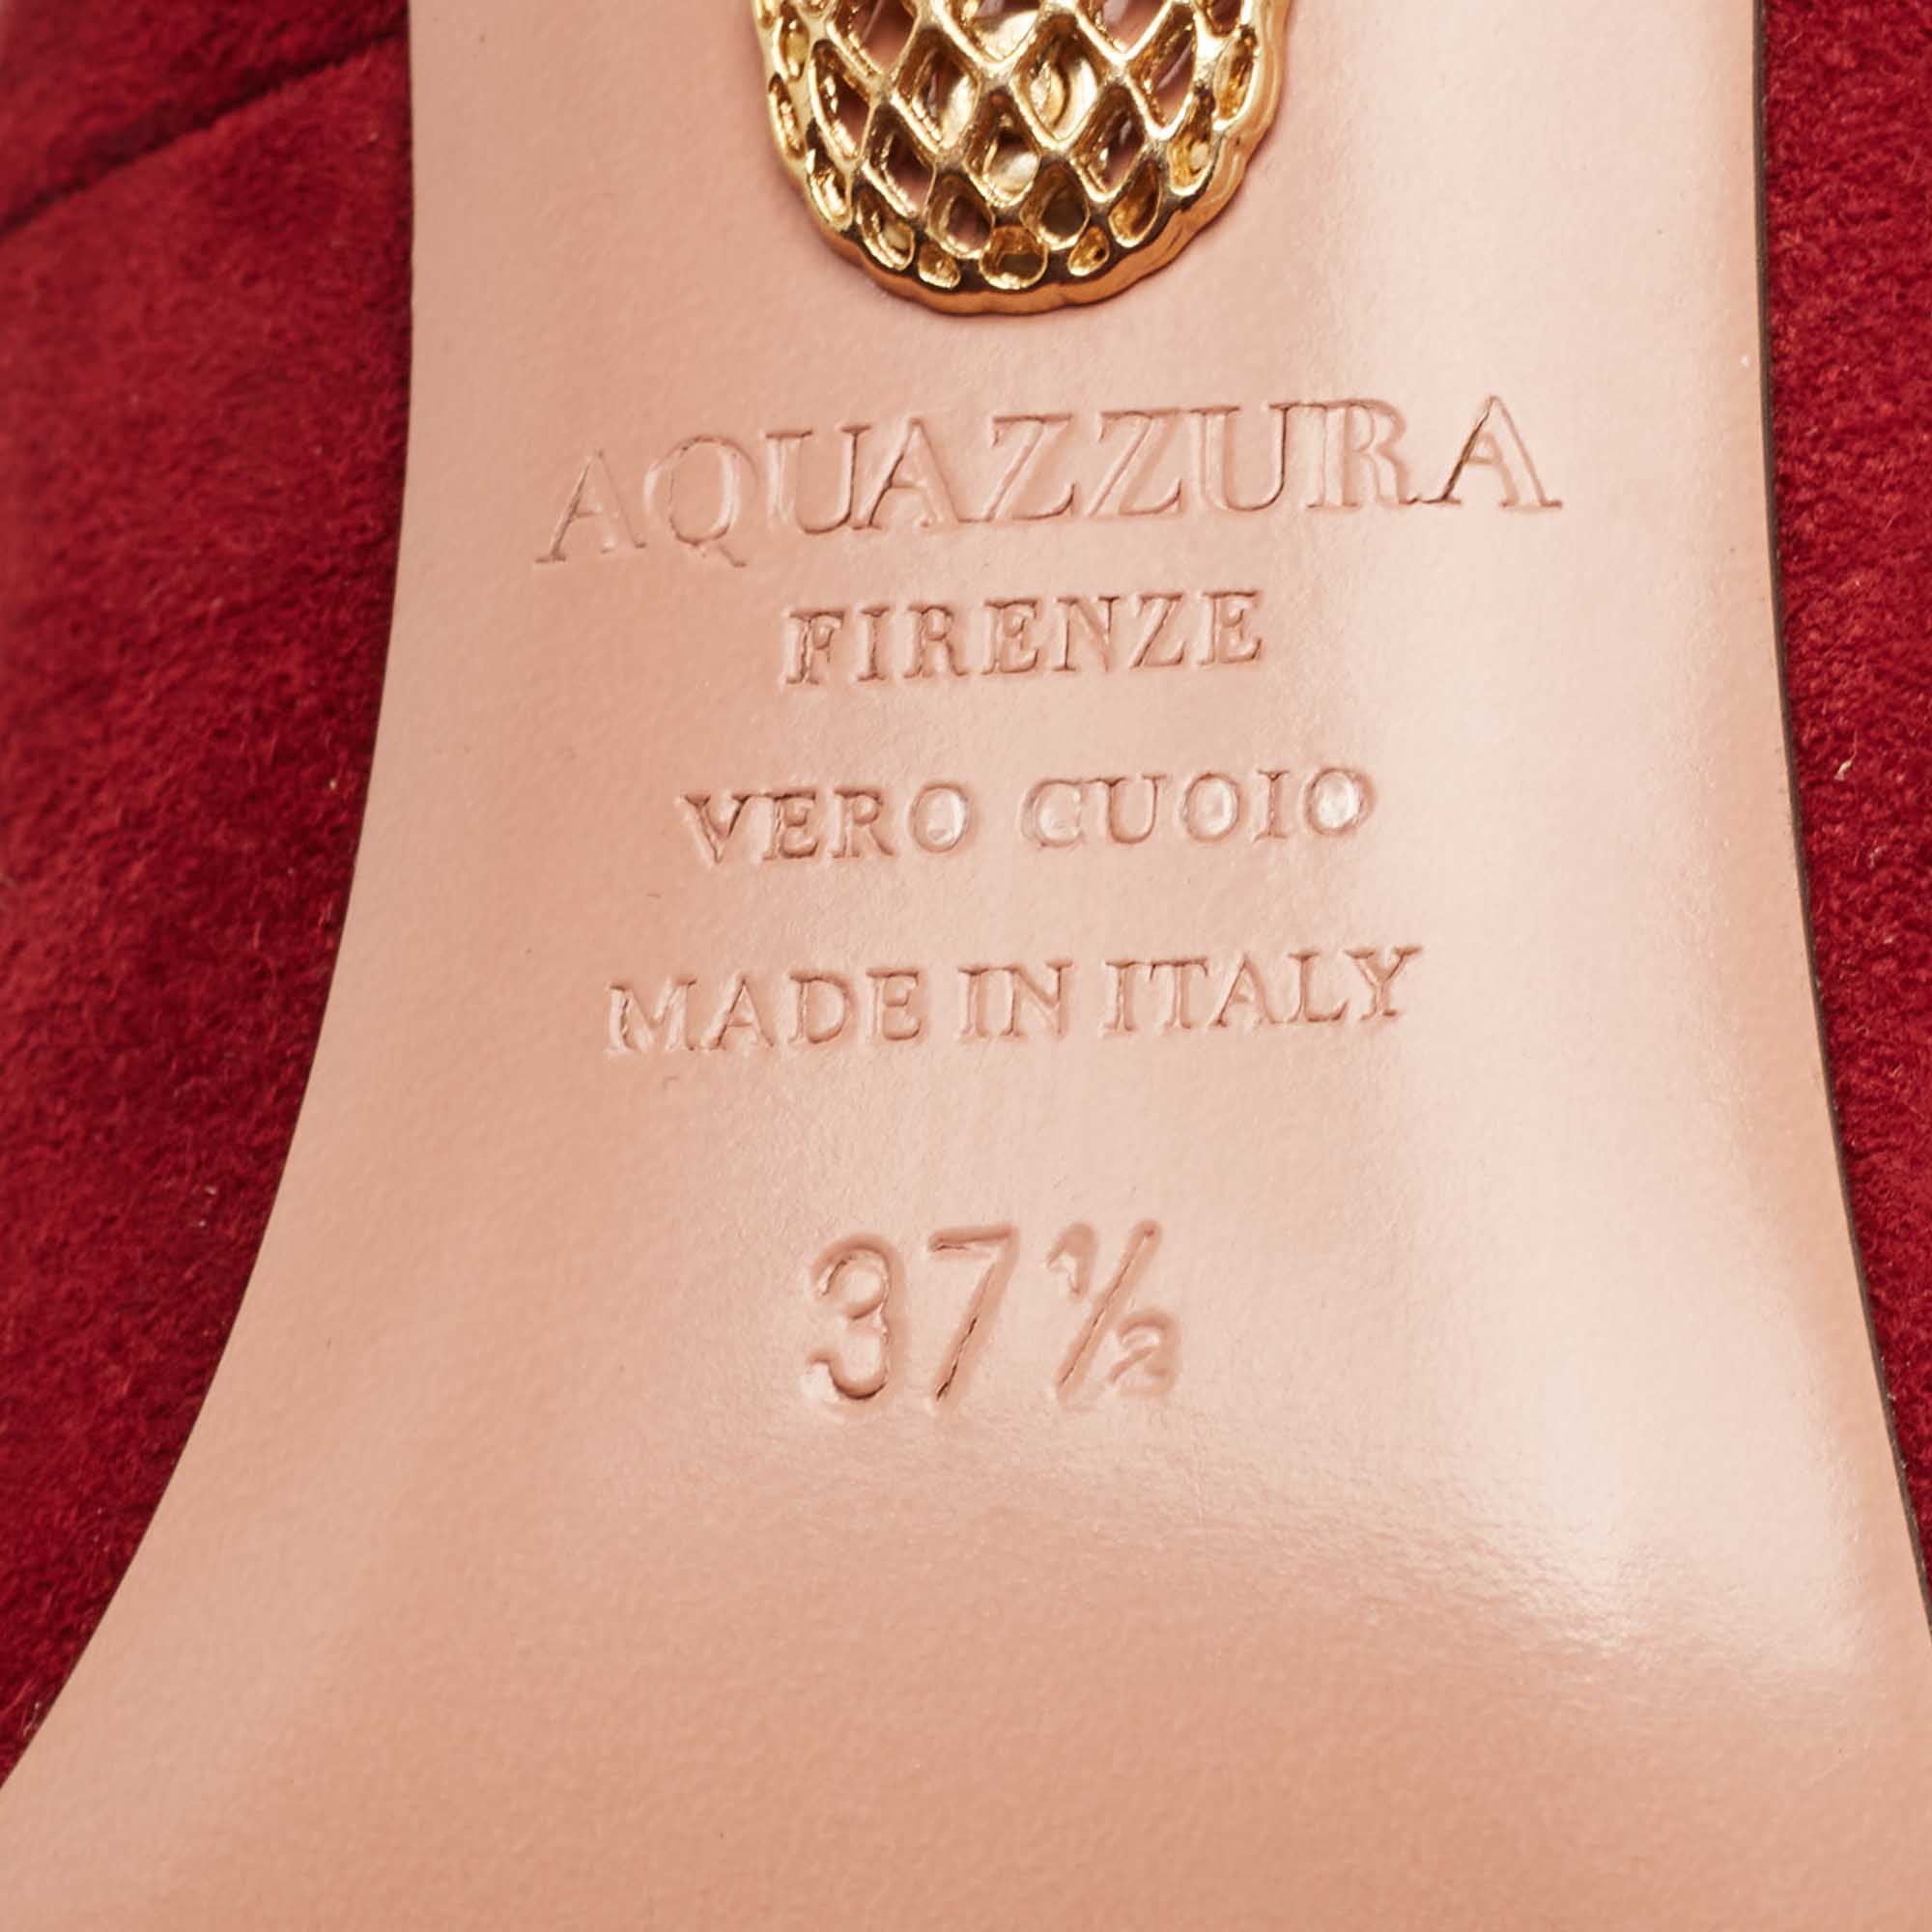 Aquazzura Burgundy Suede Purist Pumps Size 37.5